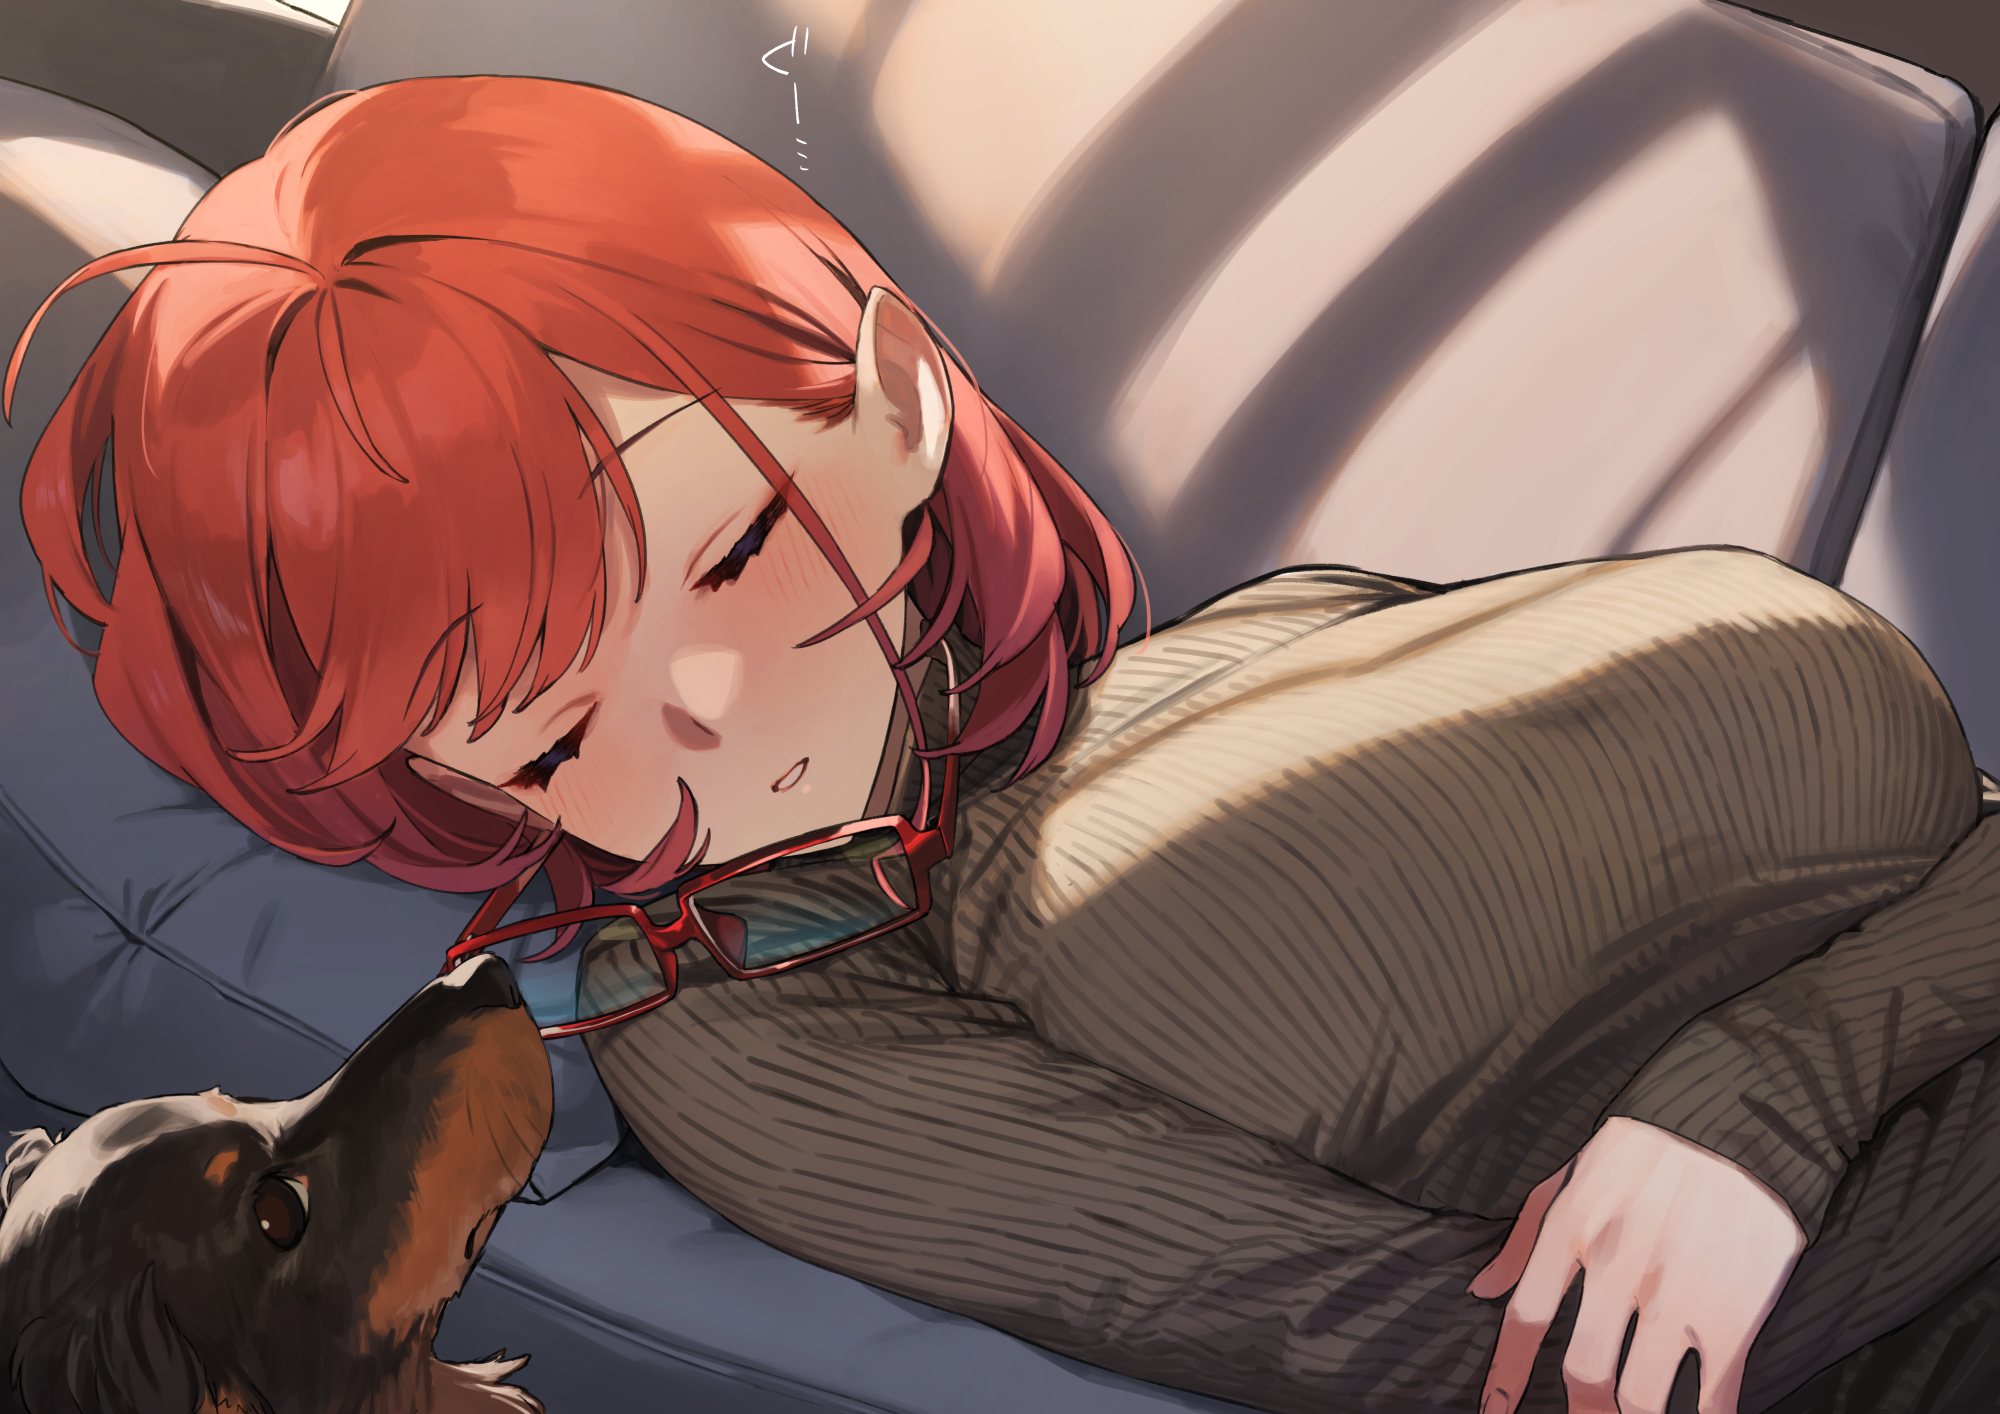 Anime 2000x1414 anime girls anime redhead blushing closed eyes sleeping glasses lying on couch lying on back lying down red glasses sweater dog short hair miyabi92 artwork